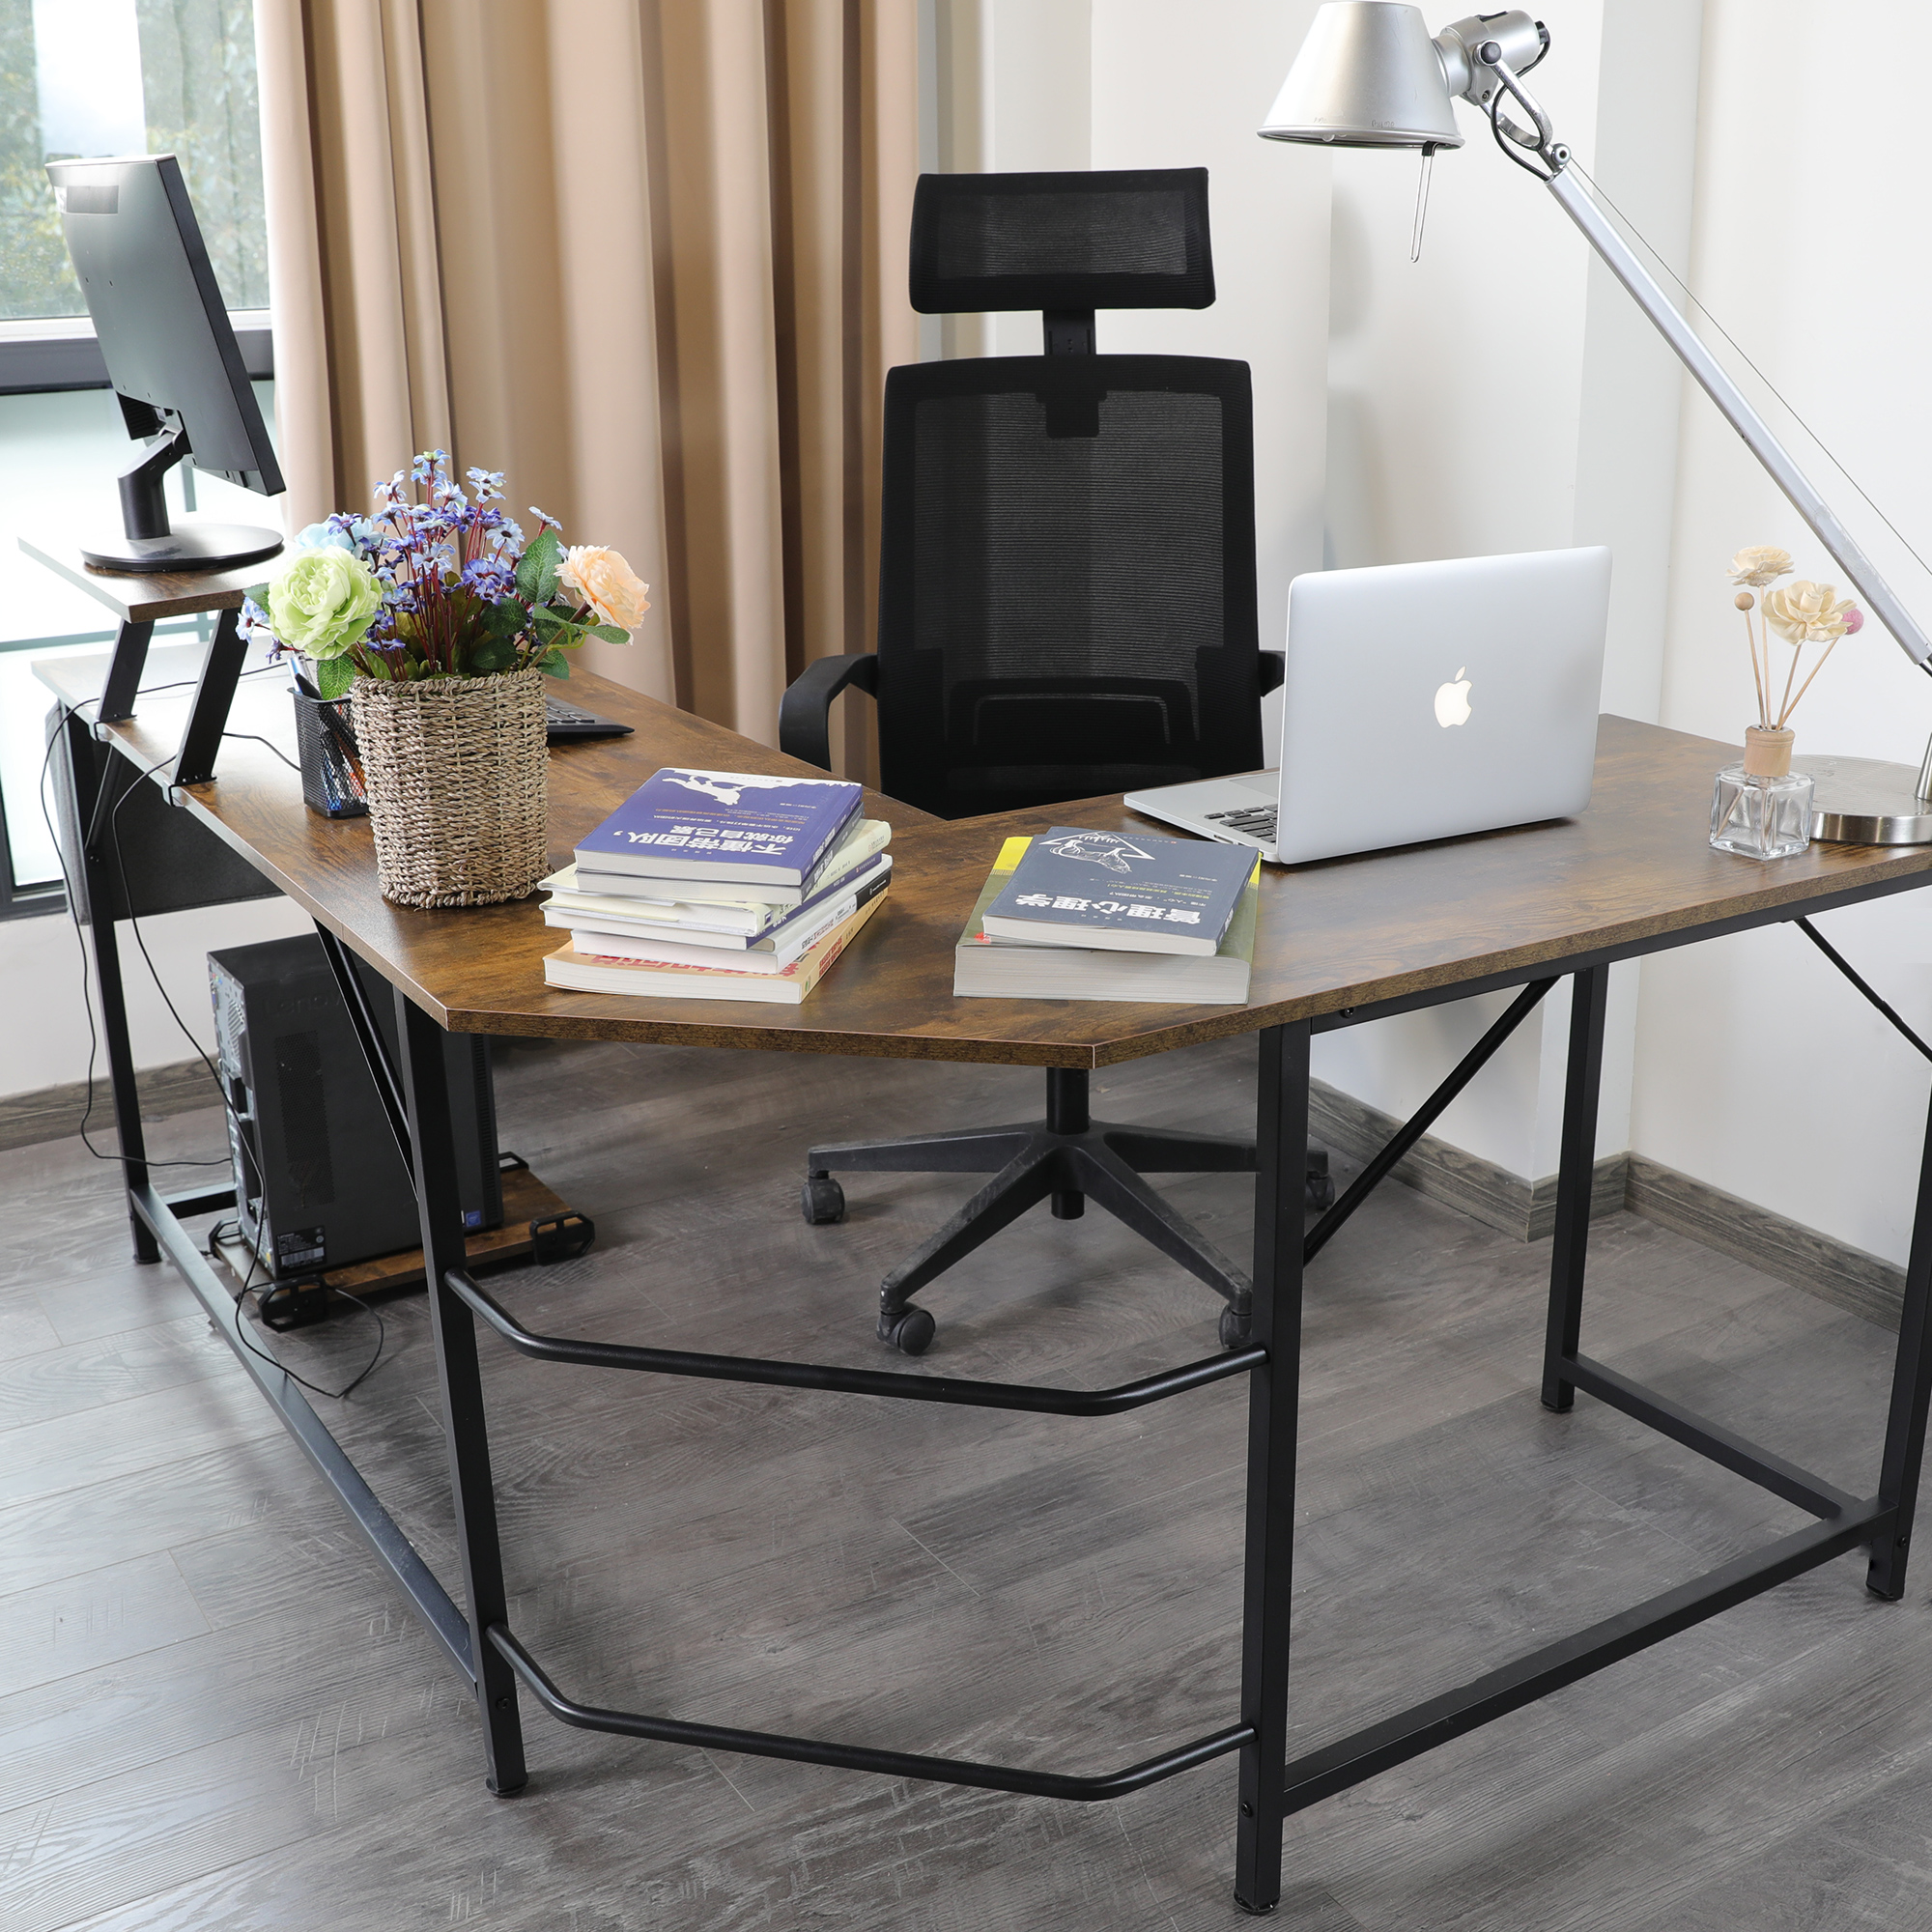 Details about   Home Office Corner Desk Wood Top PC Laptop Table WorkStation Furniture black 